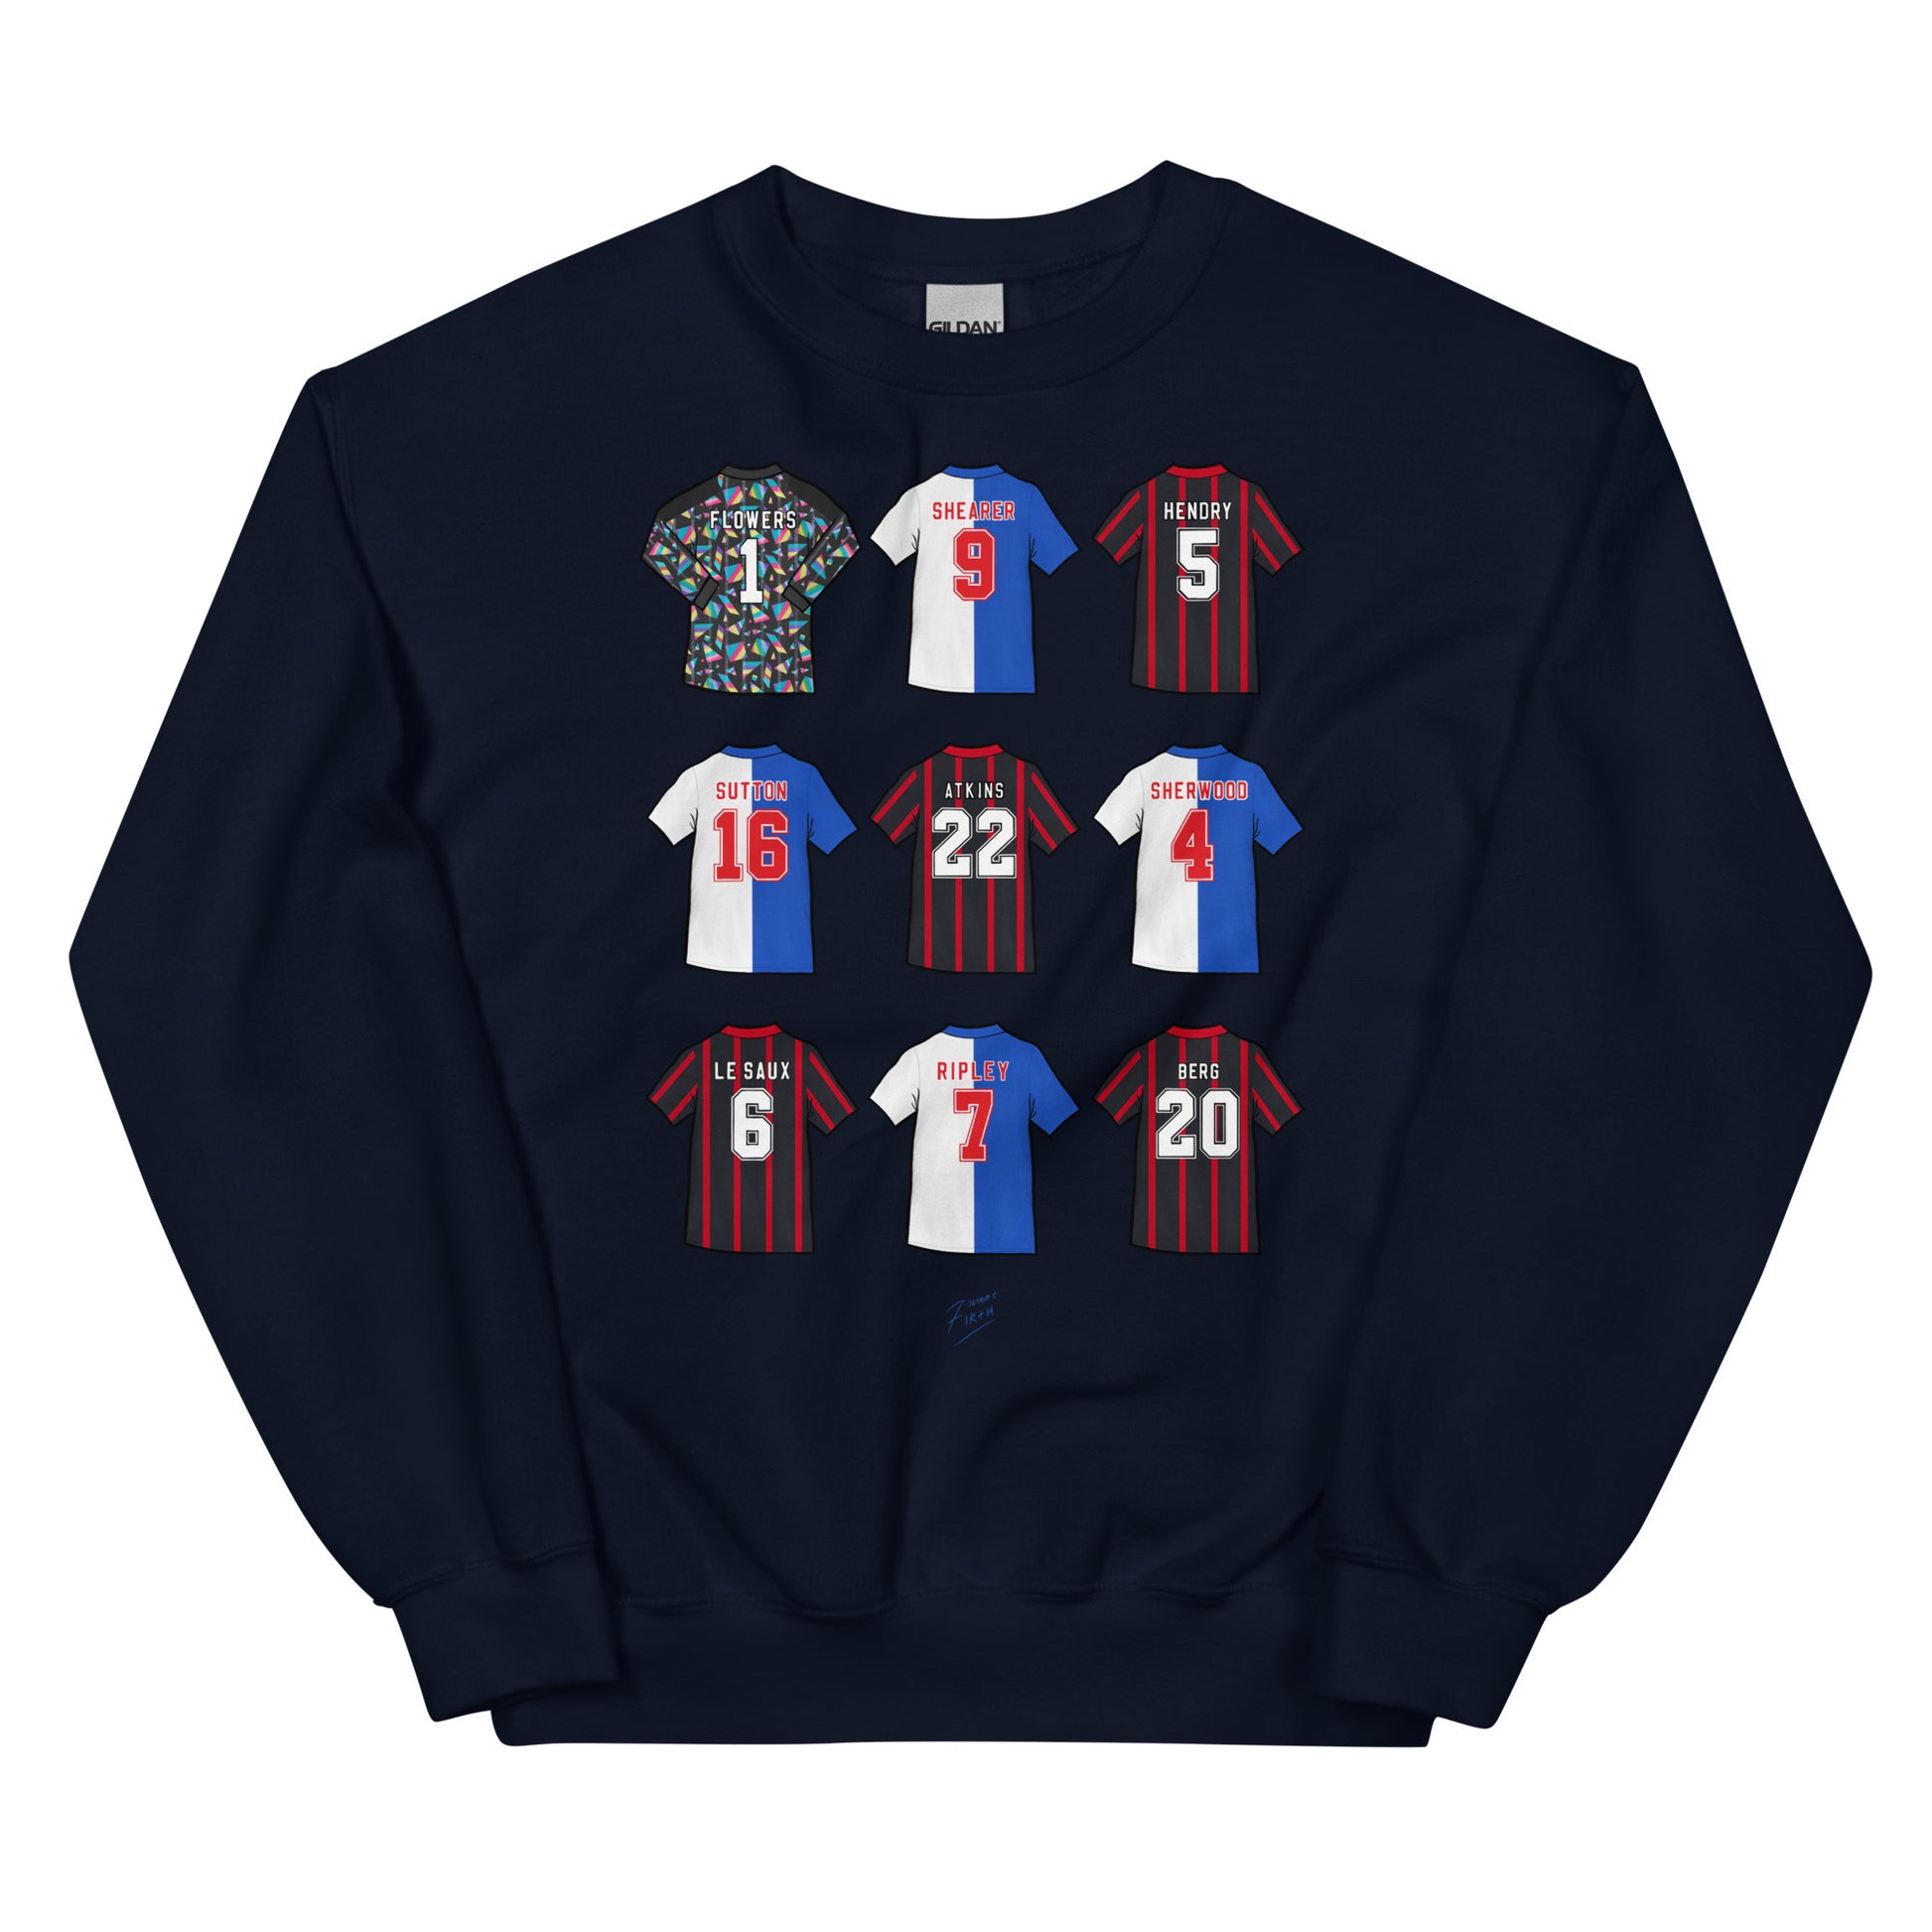 Blue sweatshirt jumper inspired by the Blackburn Rovers side of 1994/95